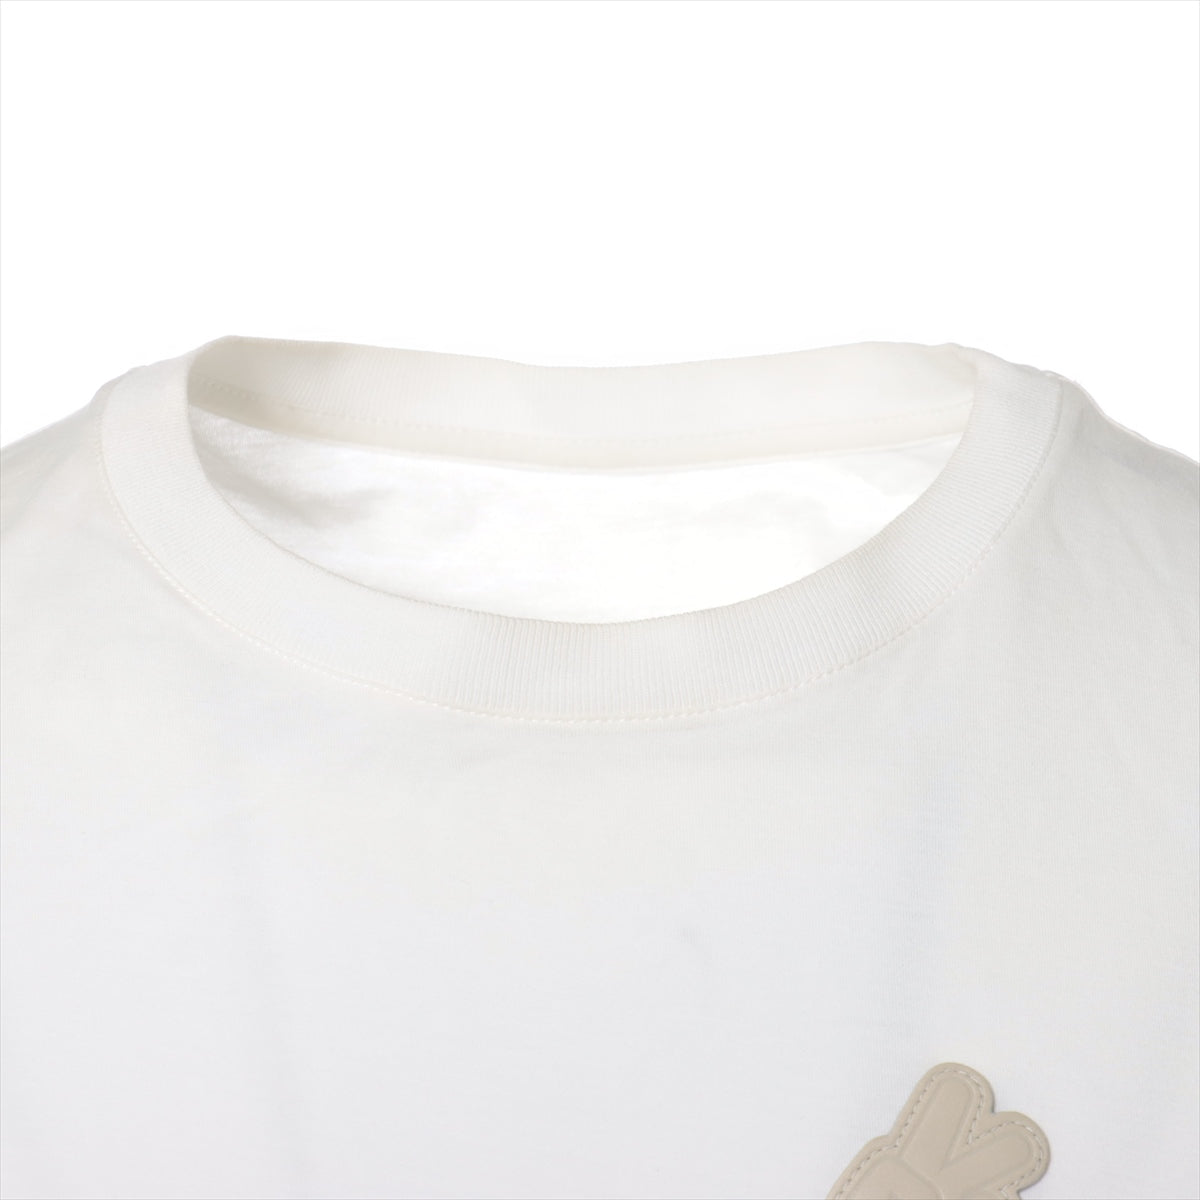 Louis Vuitton 14AW Cotton T-shirt M Men's White  RM142M LV Cup